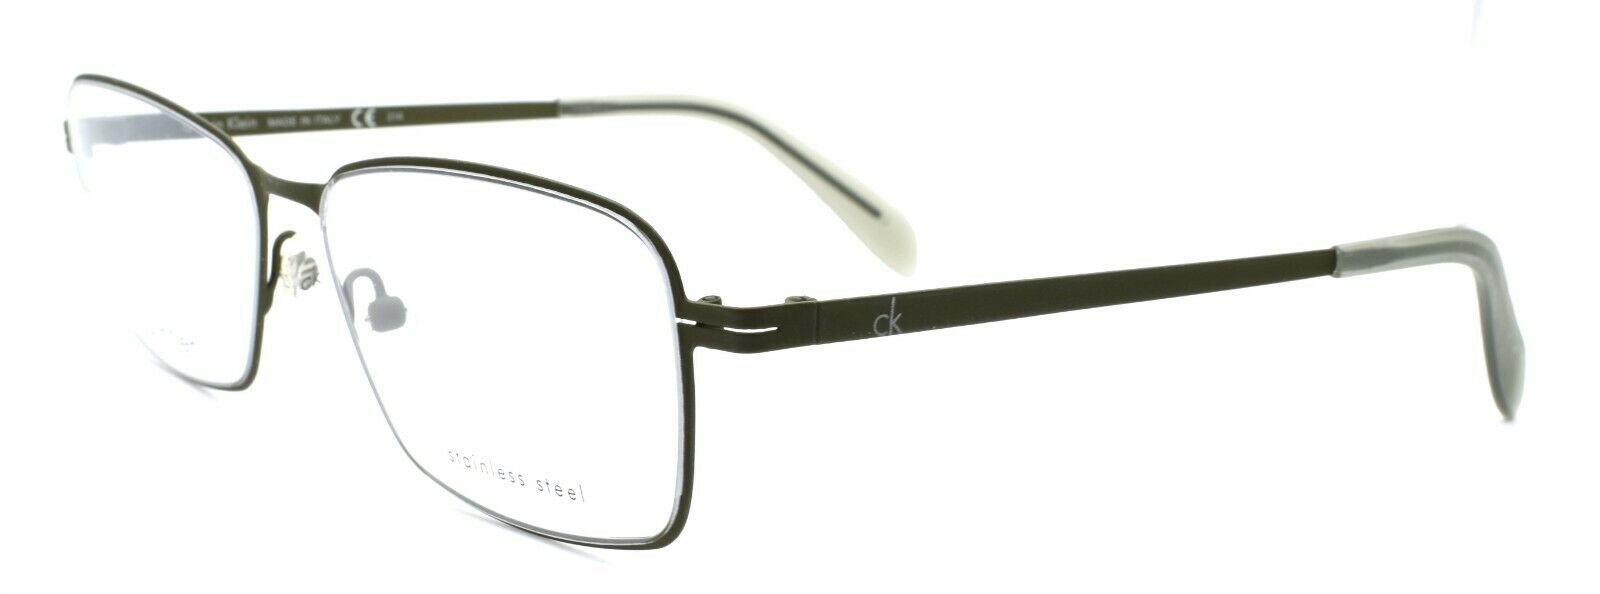 1-Calvin Klein CK5401 317 Men's Eyeglasses Frames 55-16-140 Military Green ITALY-750779068274-IKSpecs